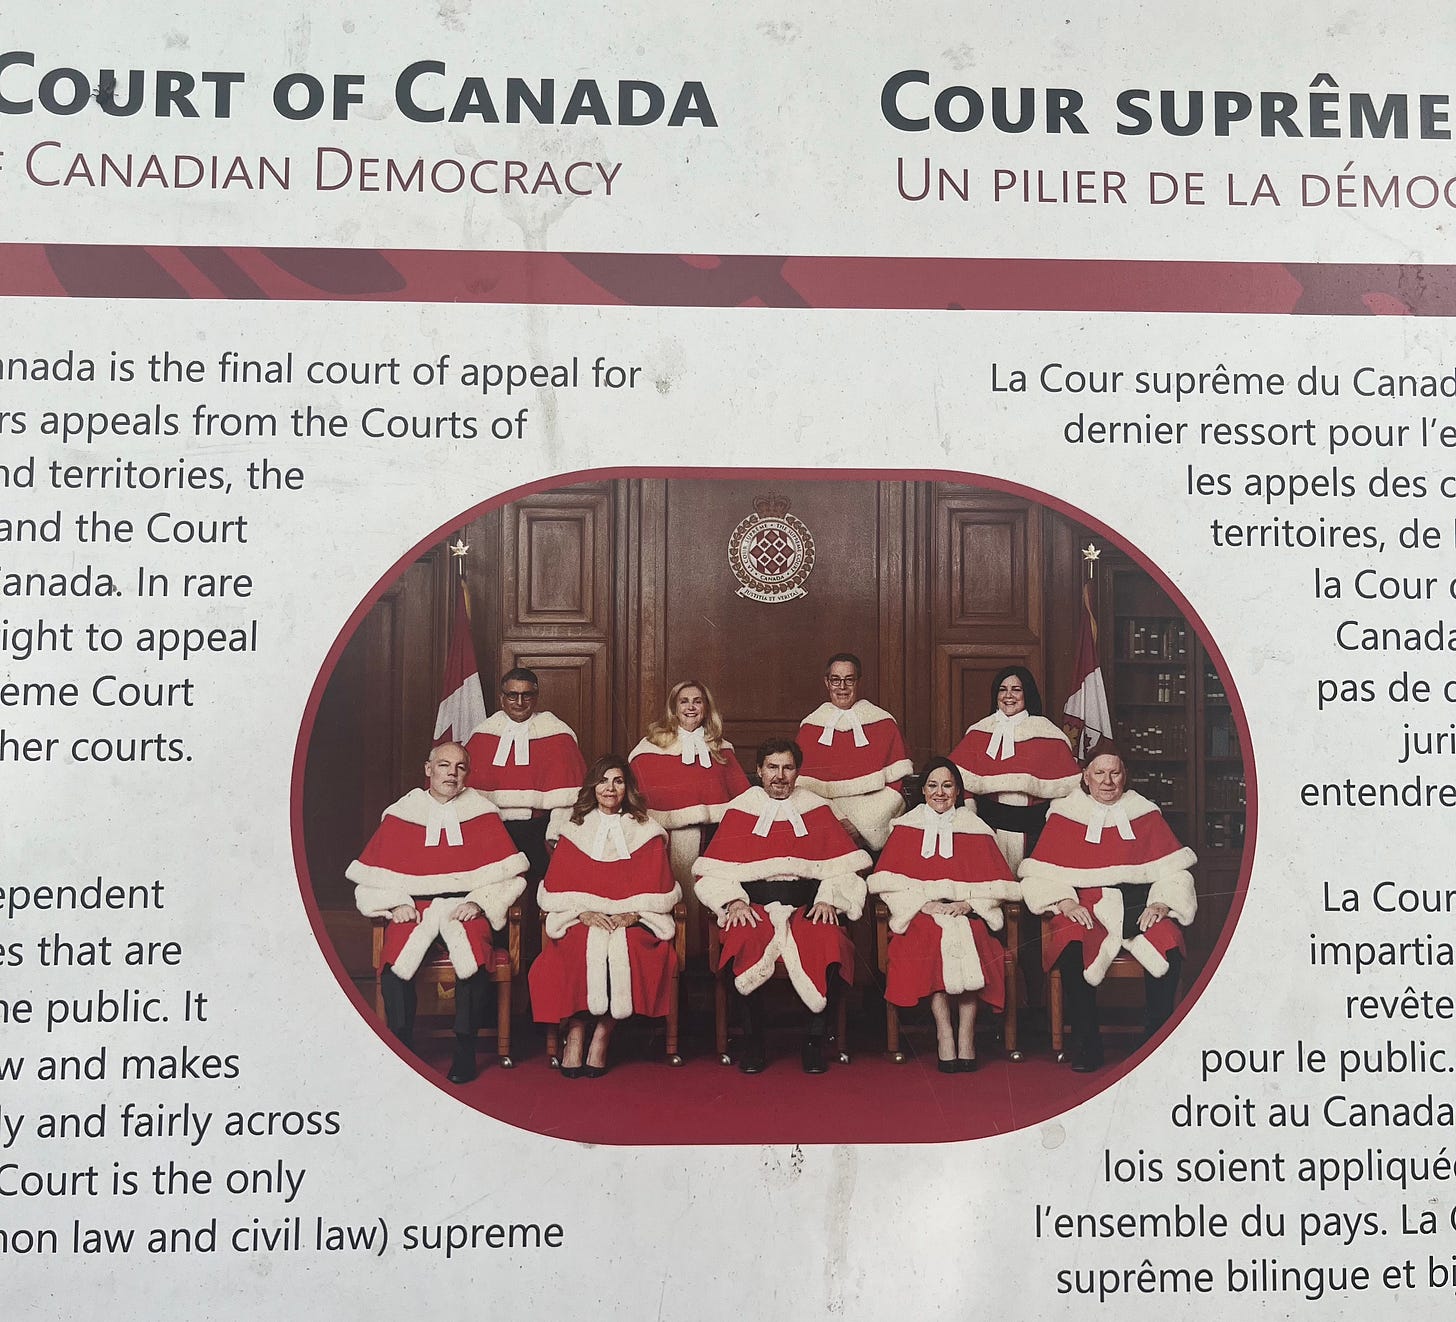 The Canadian Supreme Court, dressed like Santa